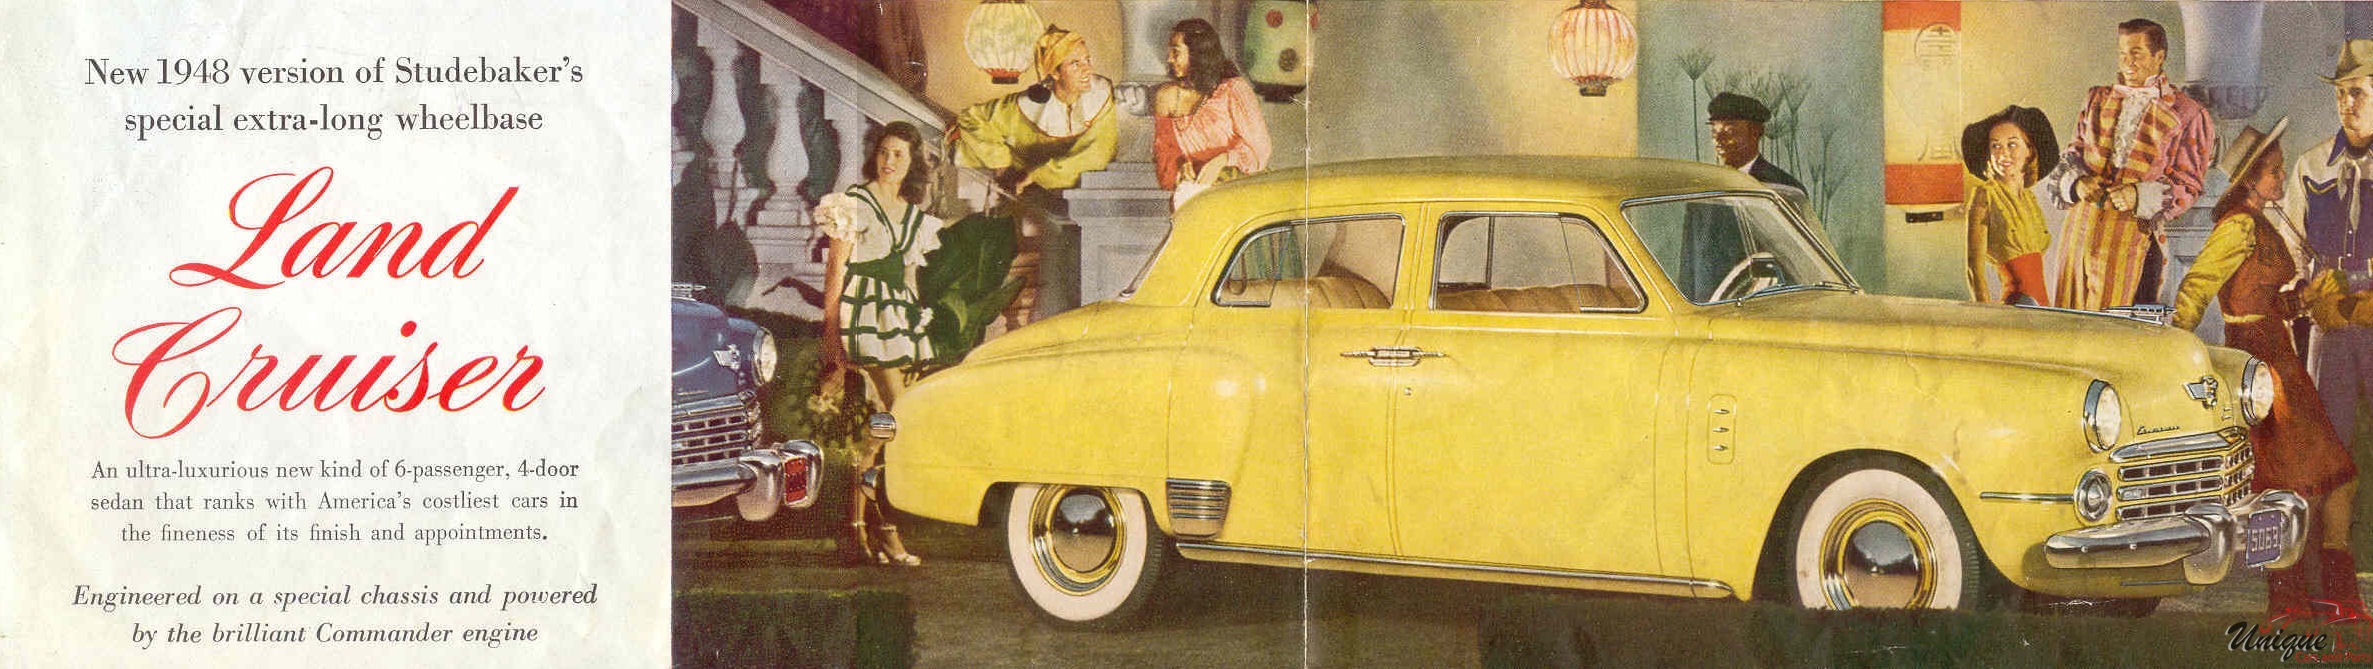 1948 Studebaker Brochure Page 6